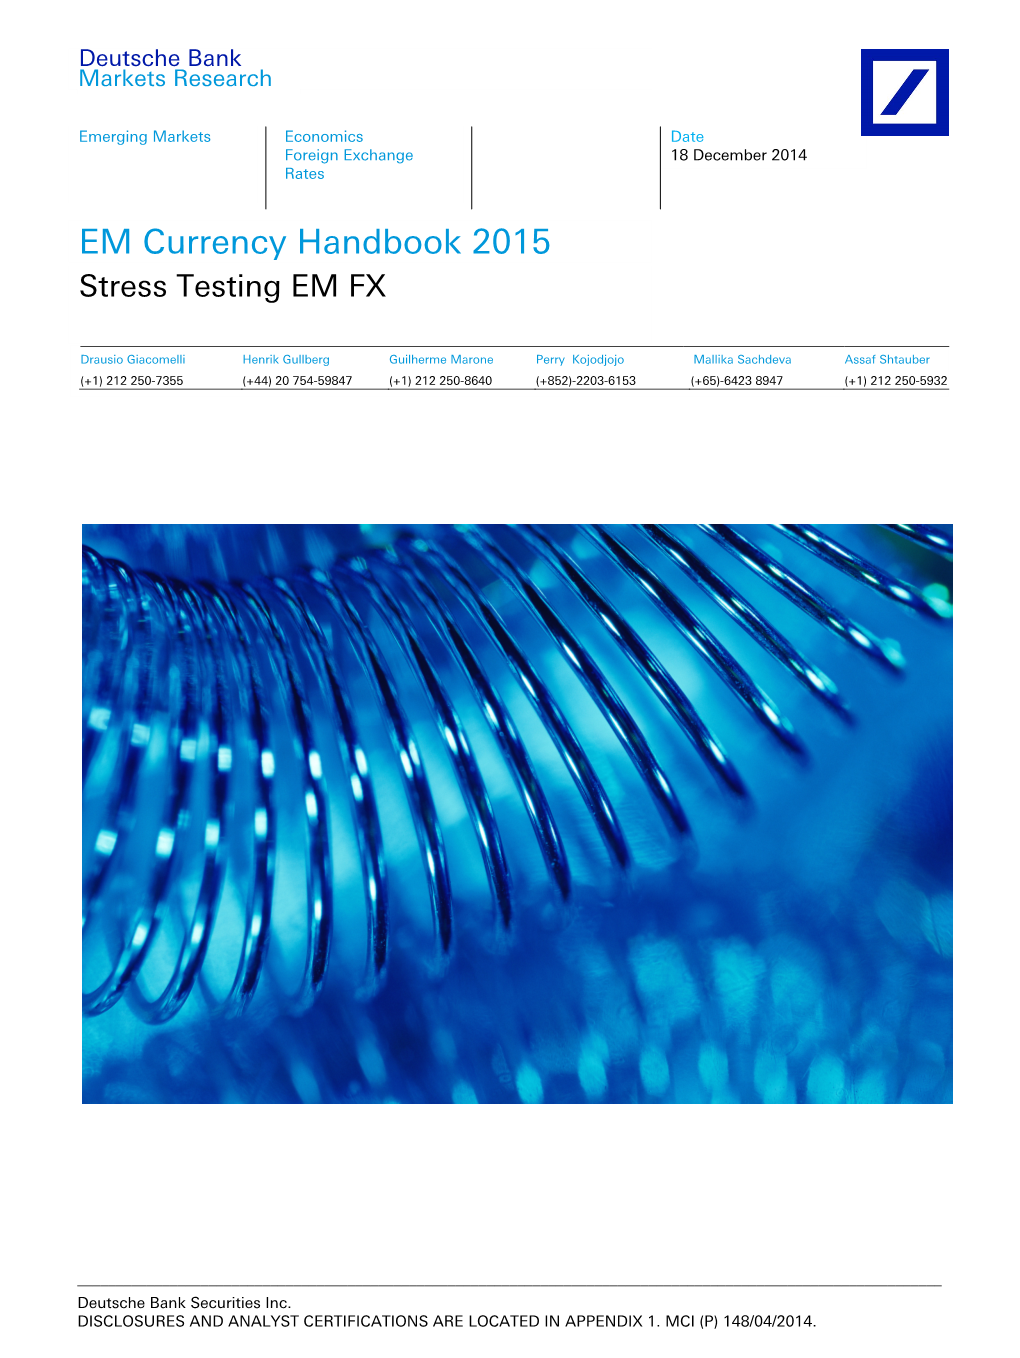 EM Currency Handbook 2015 Stress Testing EM FX